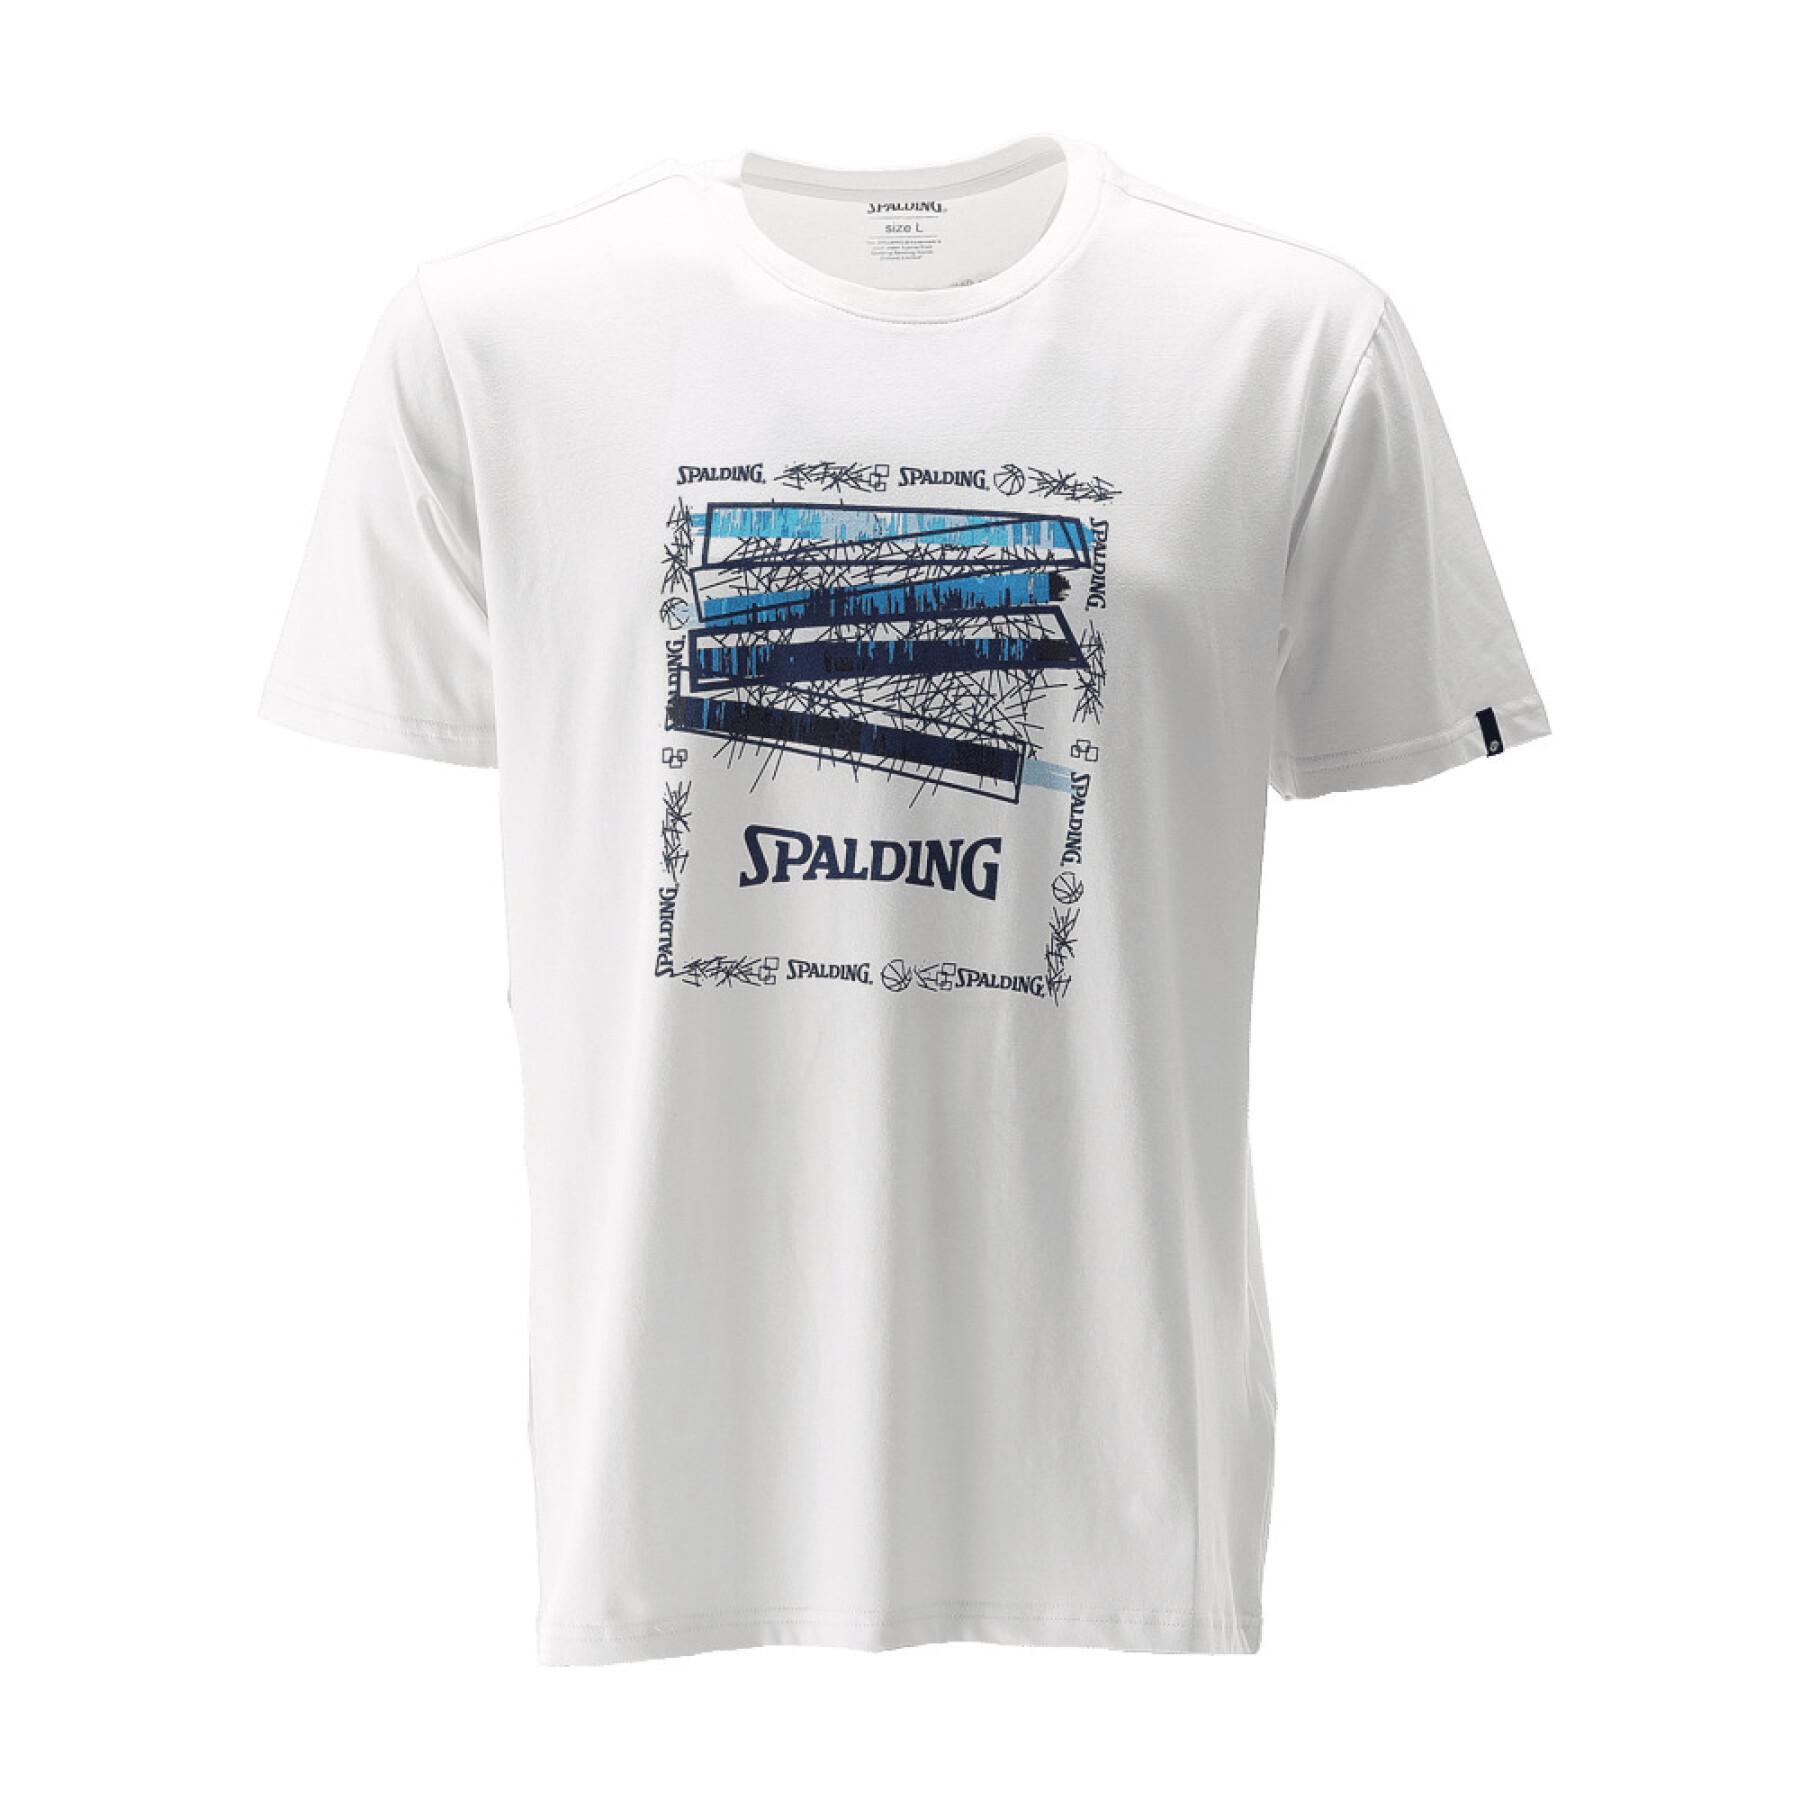 T-shirt Spalding Logo